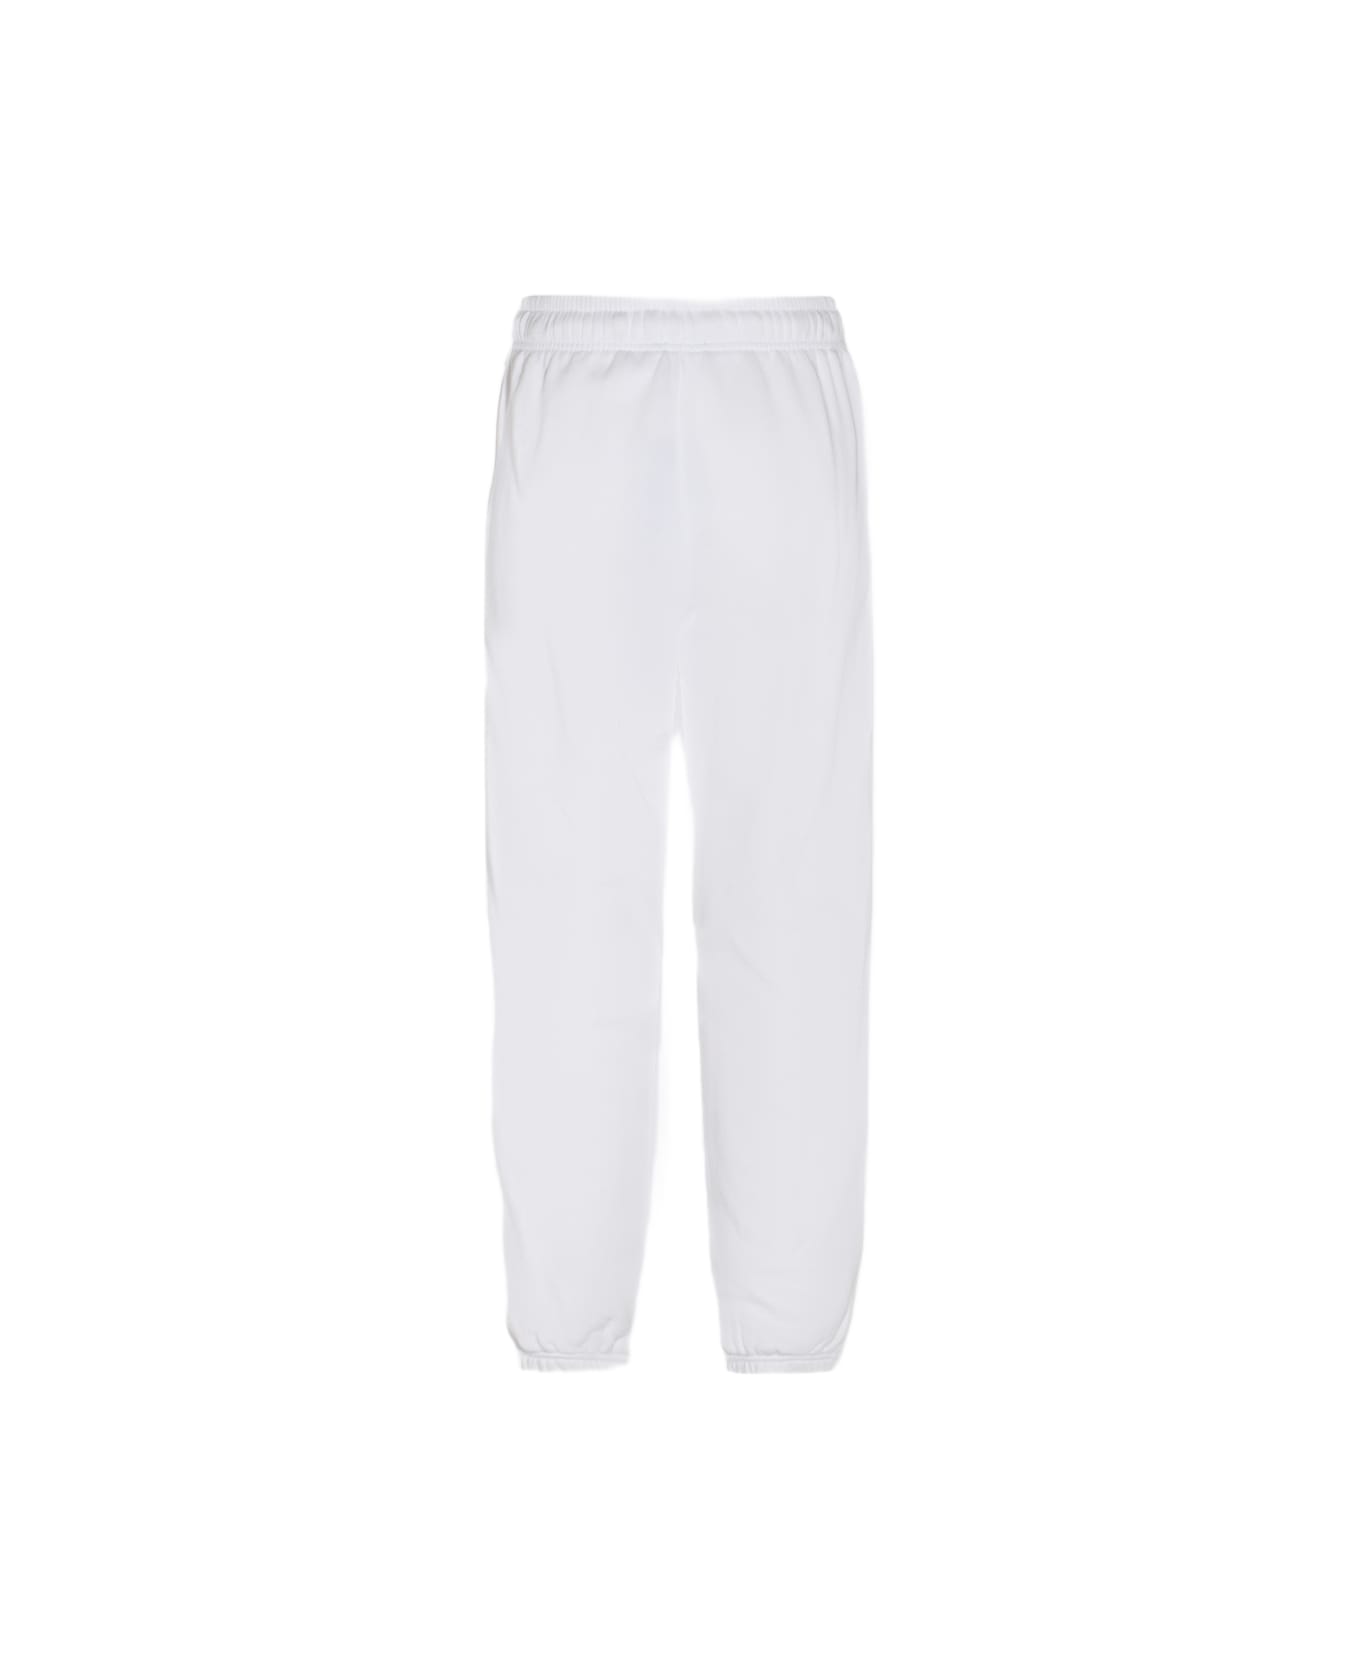 Polo Ralph Lauren White And Blue Cotton Blend Track Pants - White スウェットパンツ